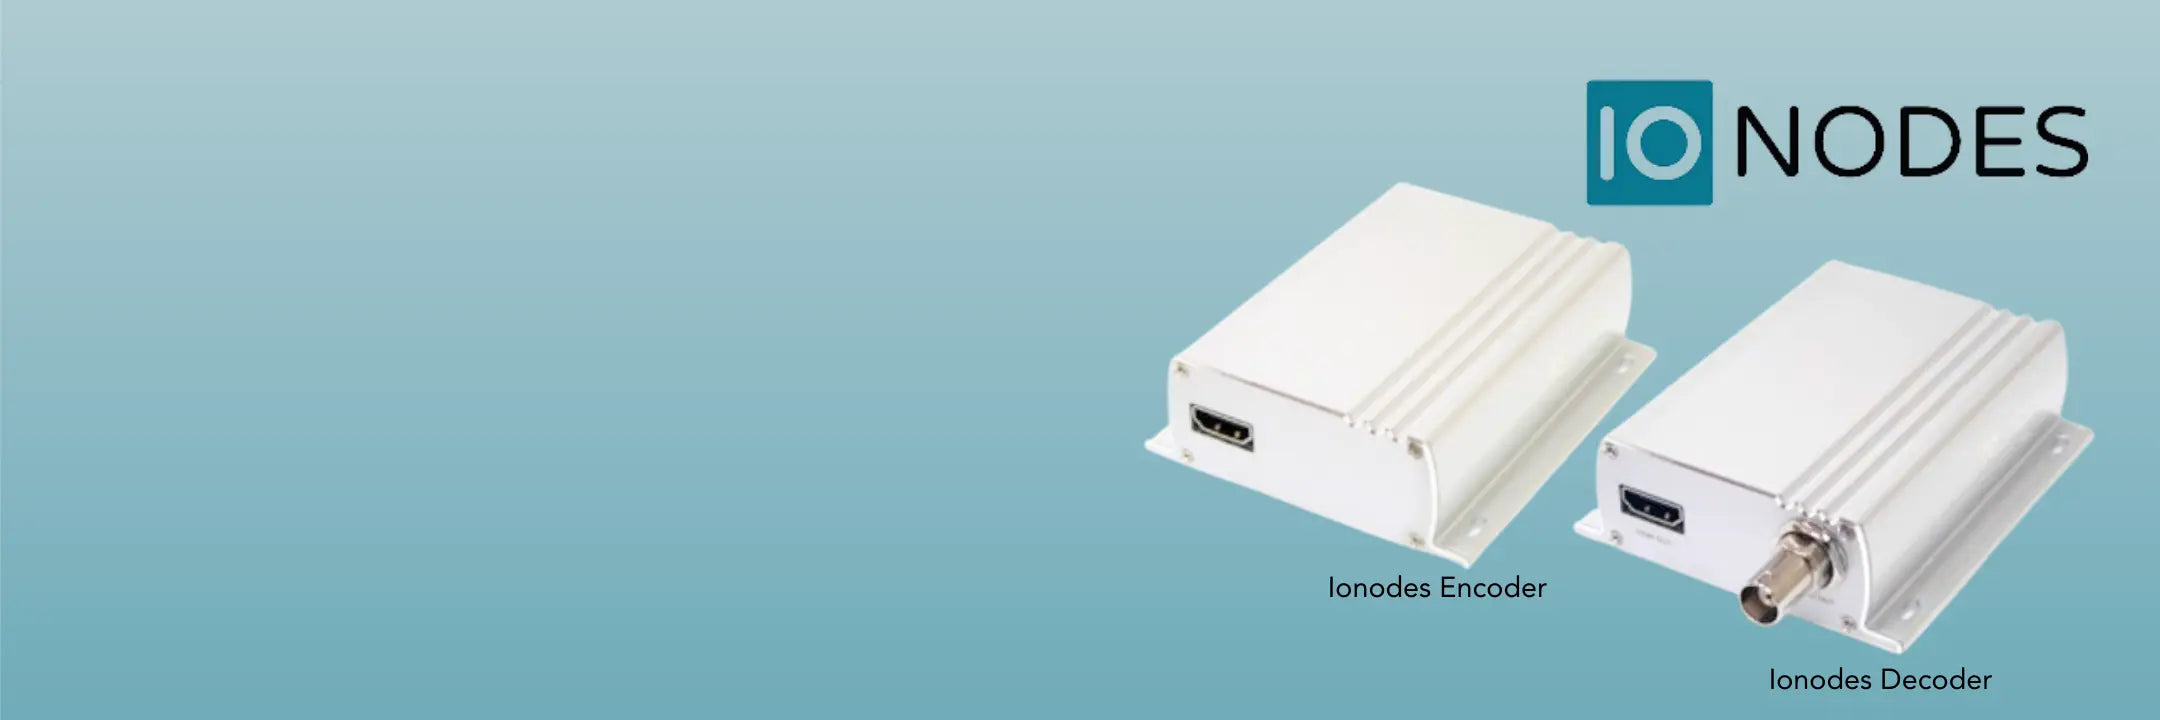 ionodes IP devices desktop banner 